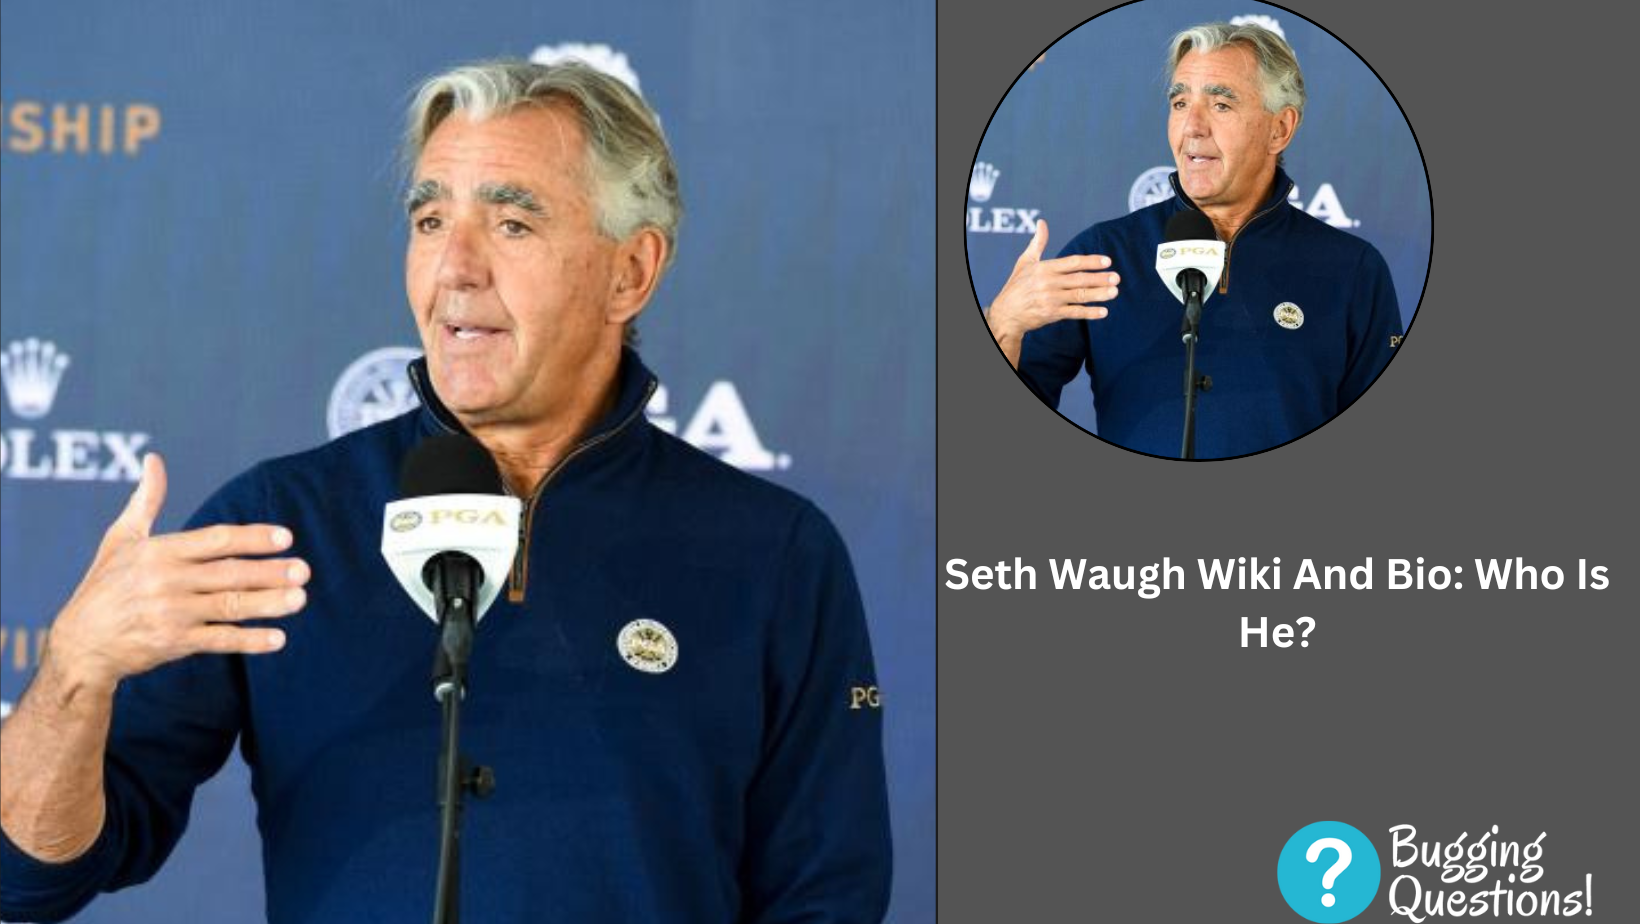 Seth Waugh Wiki And Bio: Who Is He?